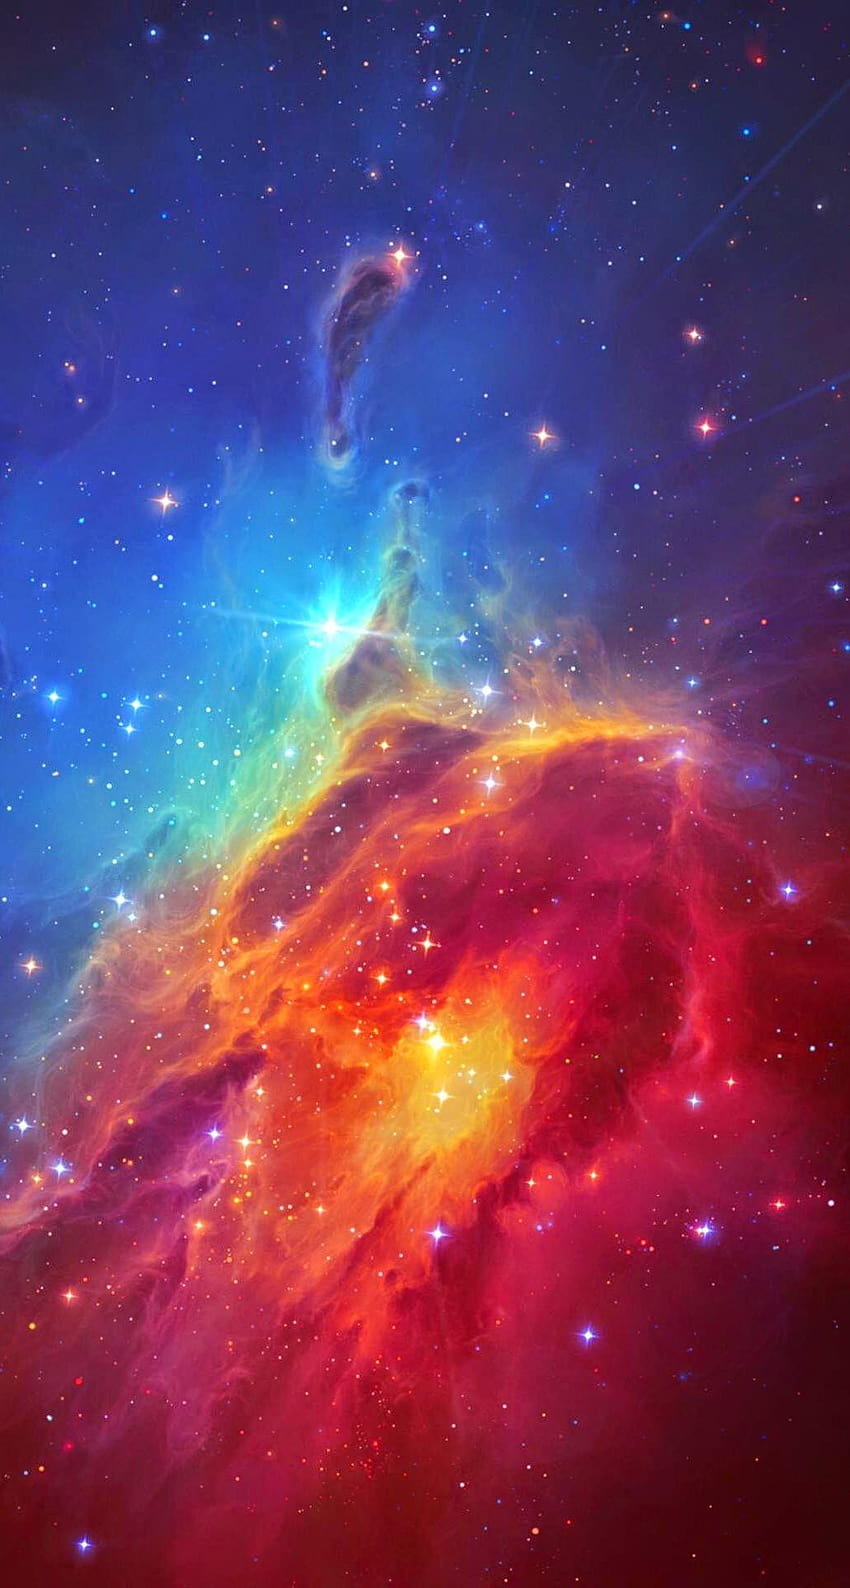 Nebula Photos Download The BEST Free Nebula Stock Photos  HD Images